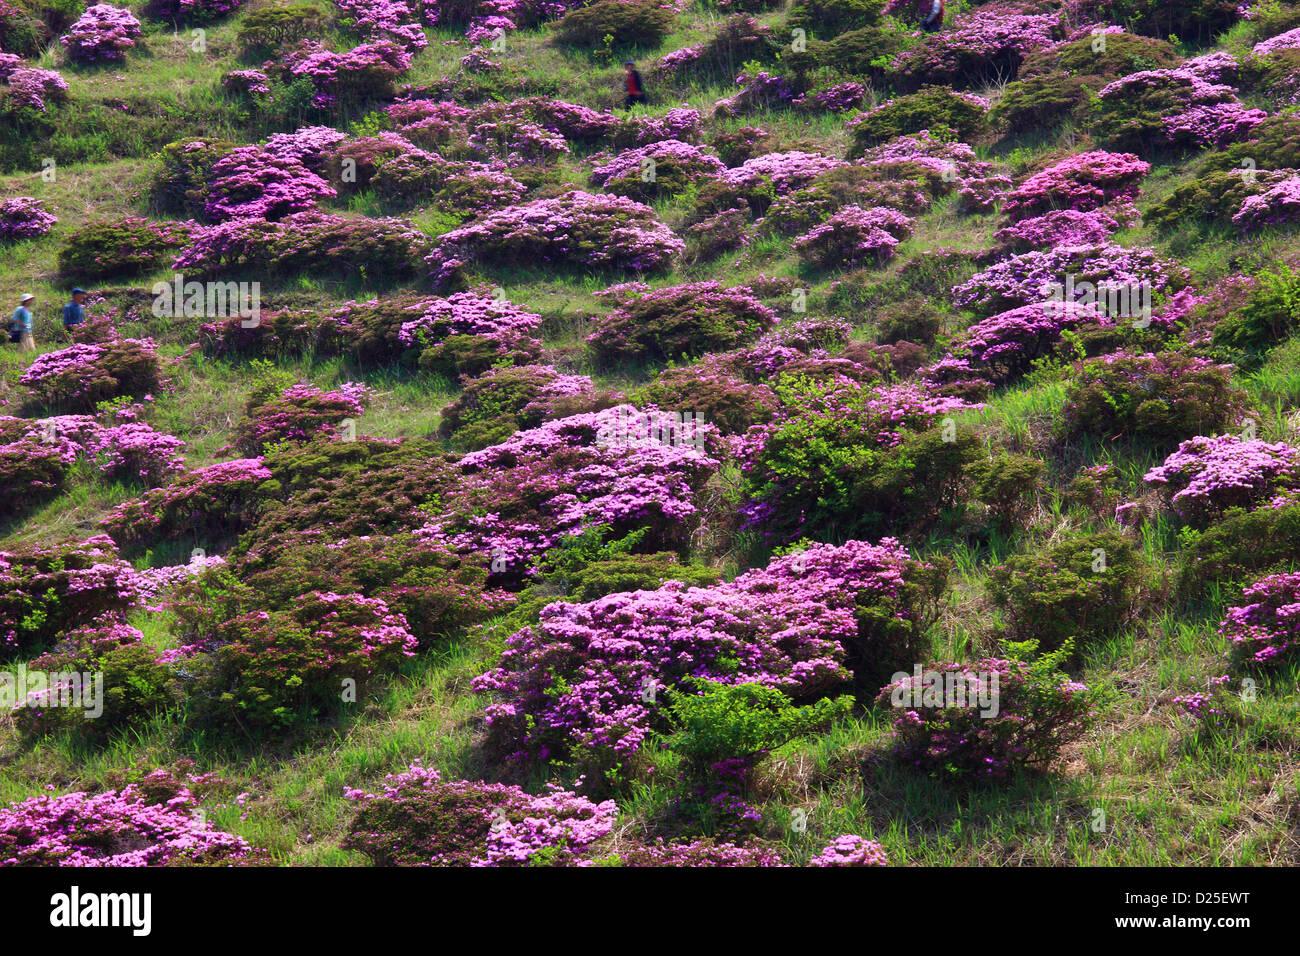 Rhododendron field at Sensui gorge, Kumamoto Prefecture Stock Photo